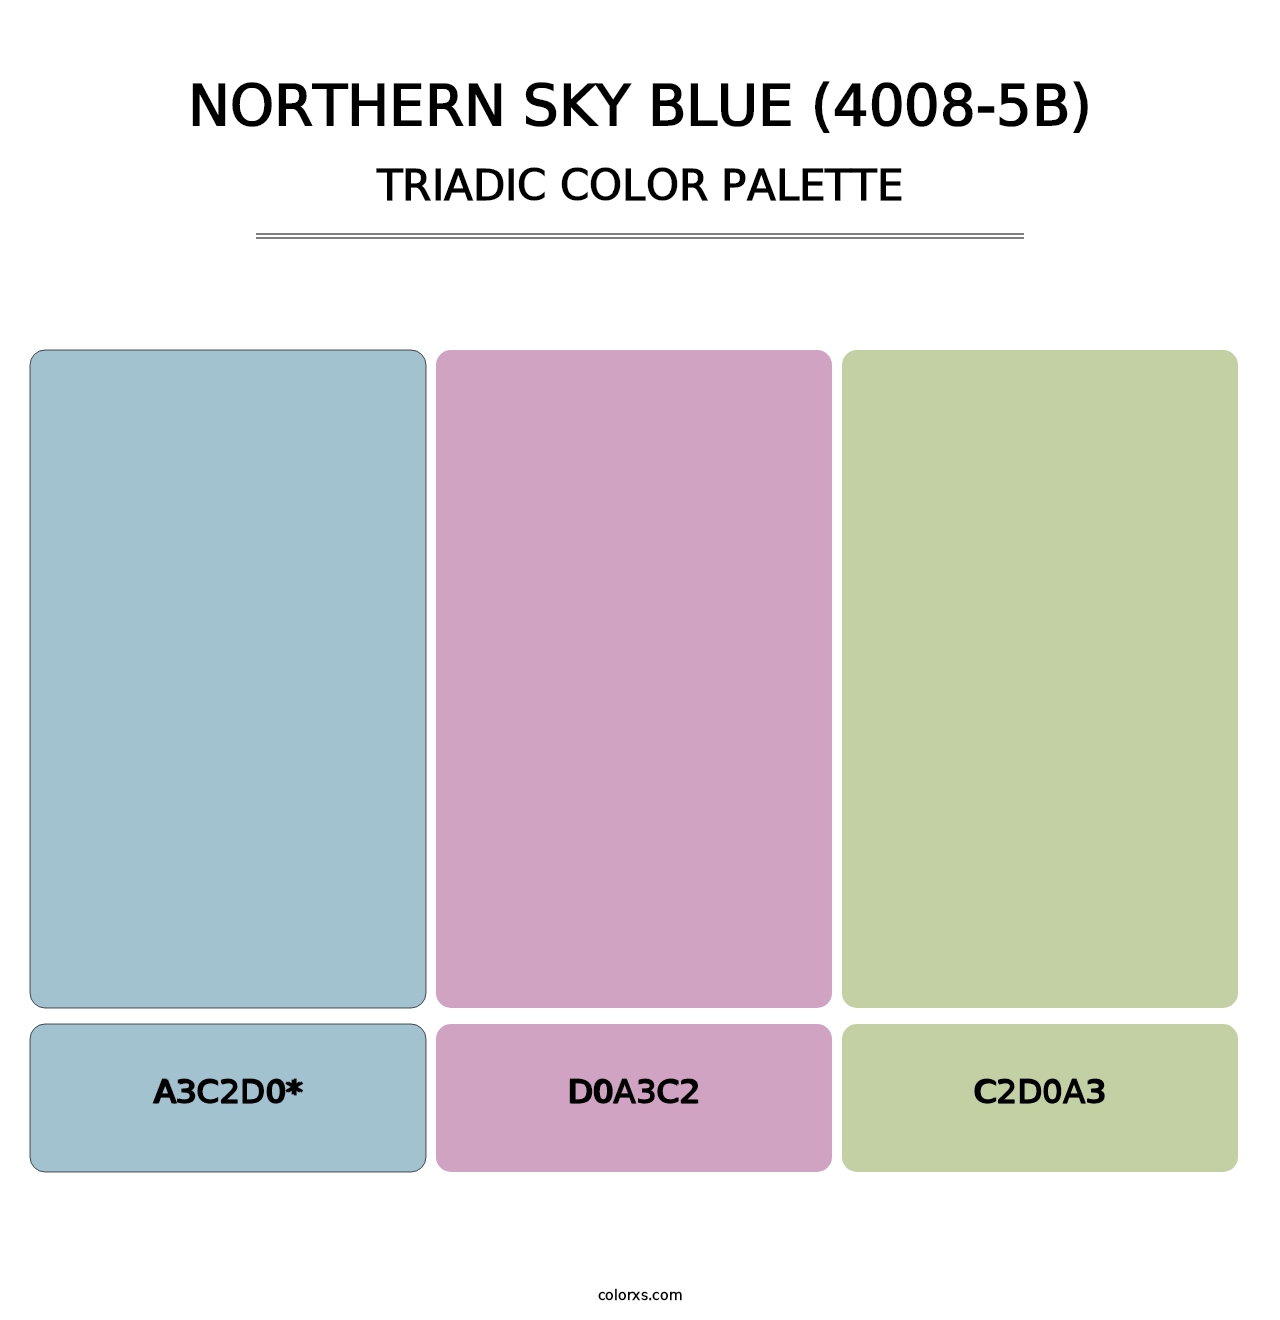 Northern Sky Blue (4008-5B) - Triadic Color Palette